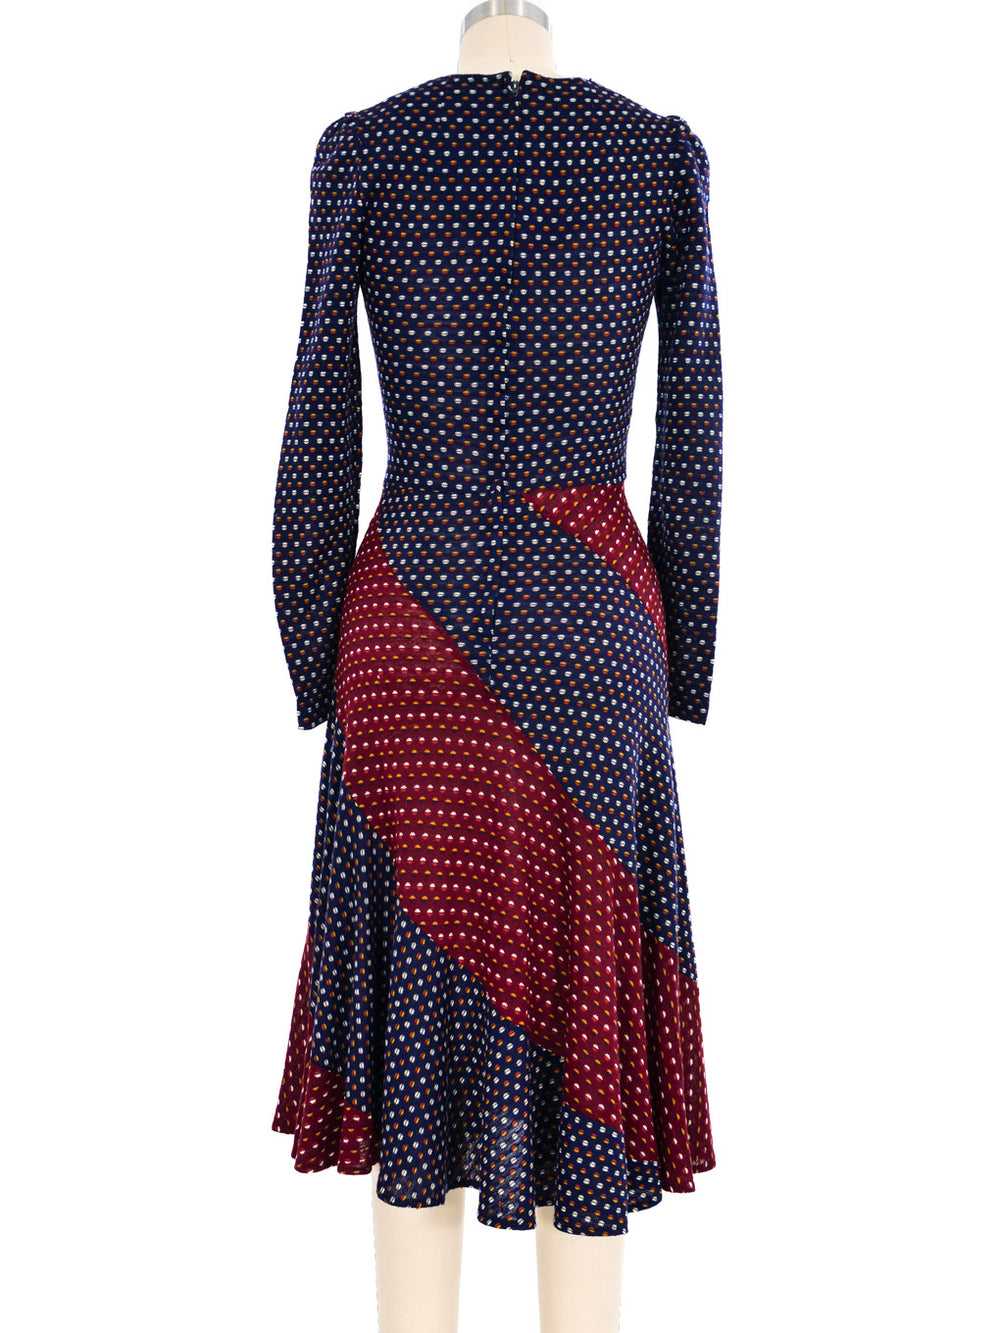 1970's Patchwork Knit Dress - image 4